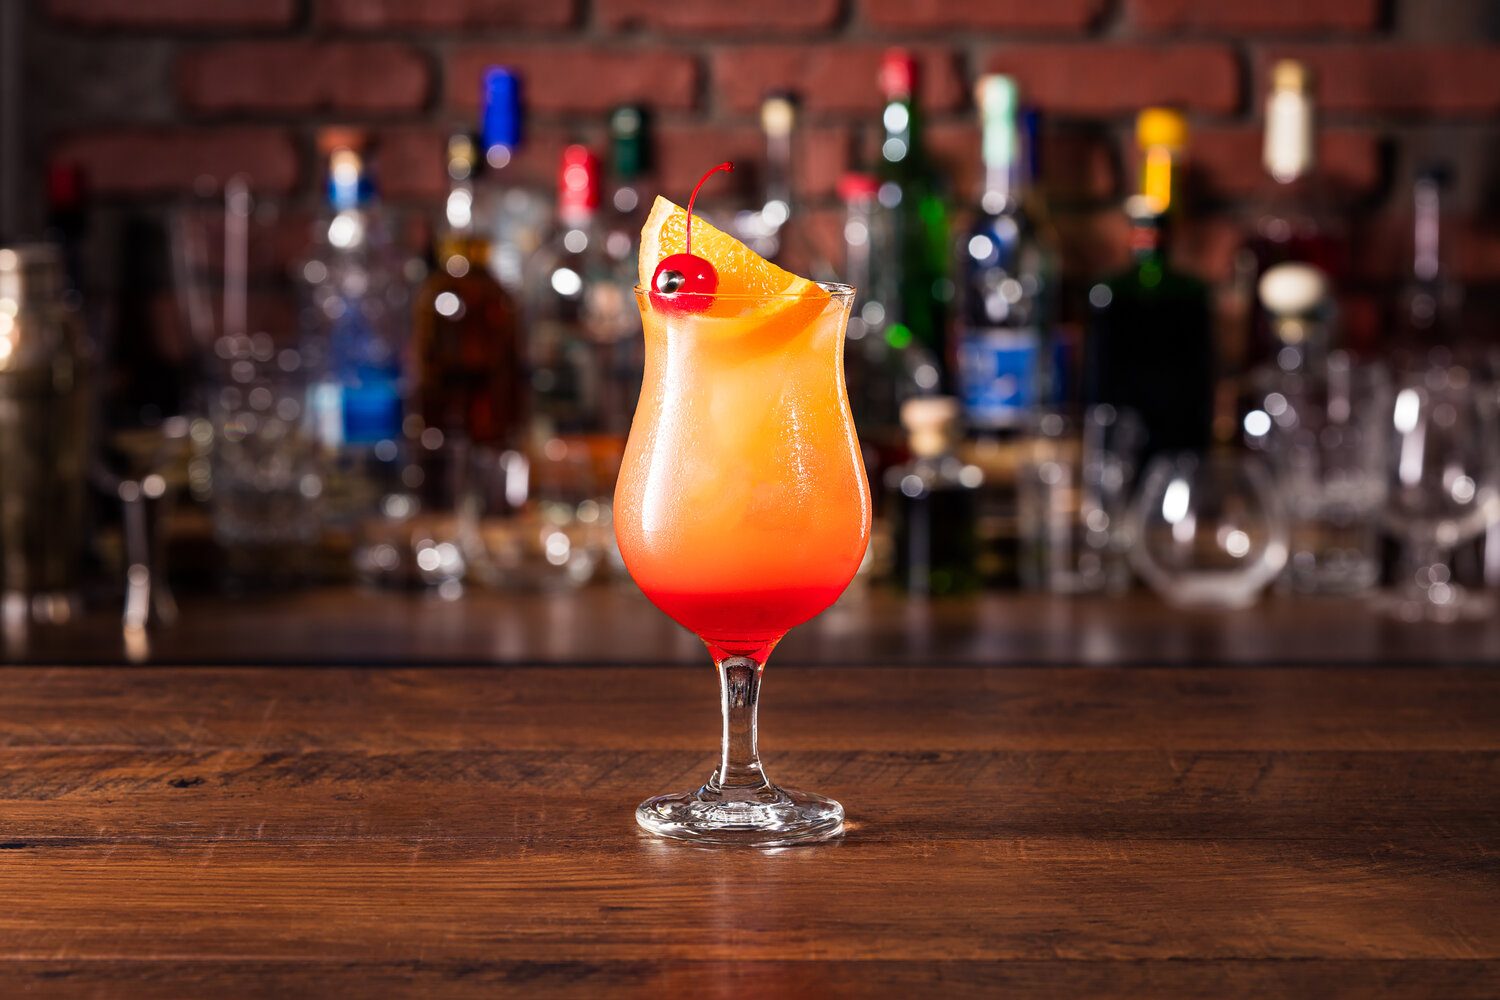 Refreshing Rum Hurricane Cocktail on a Bar